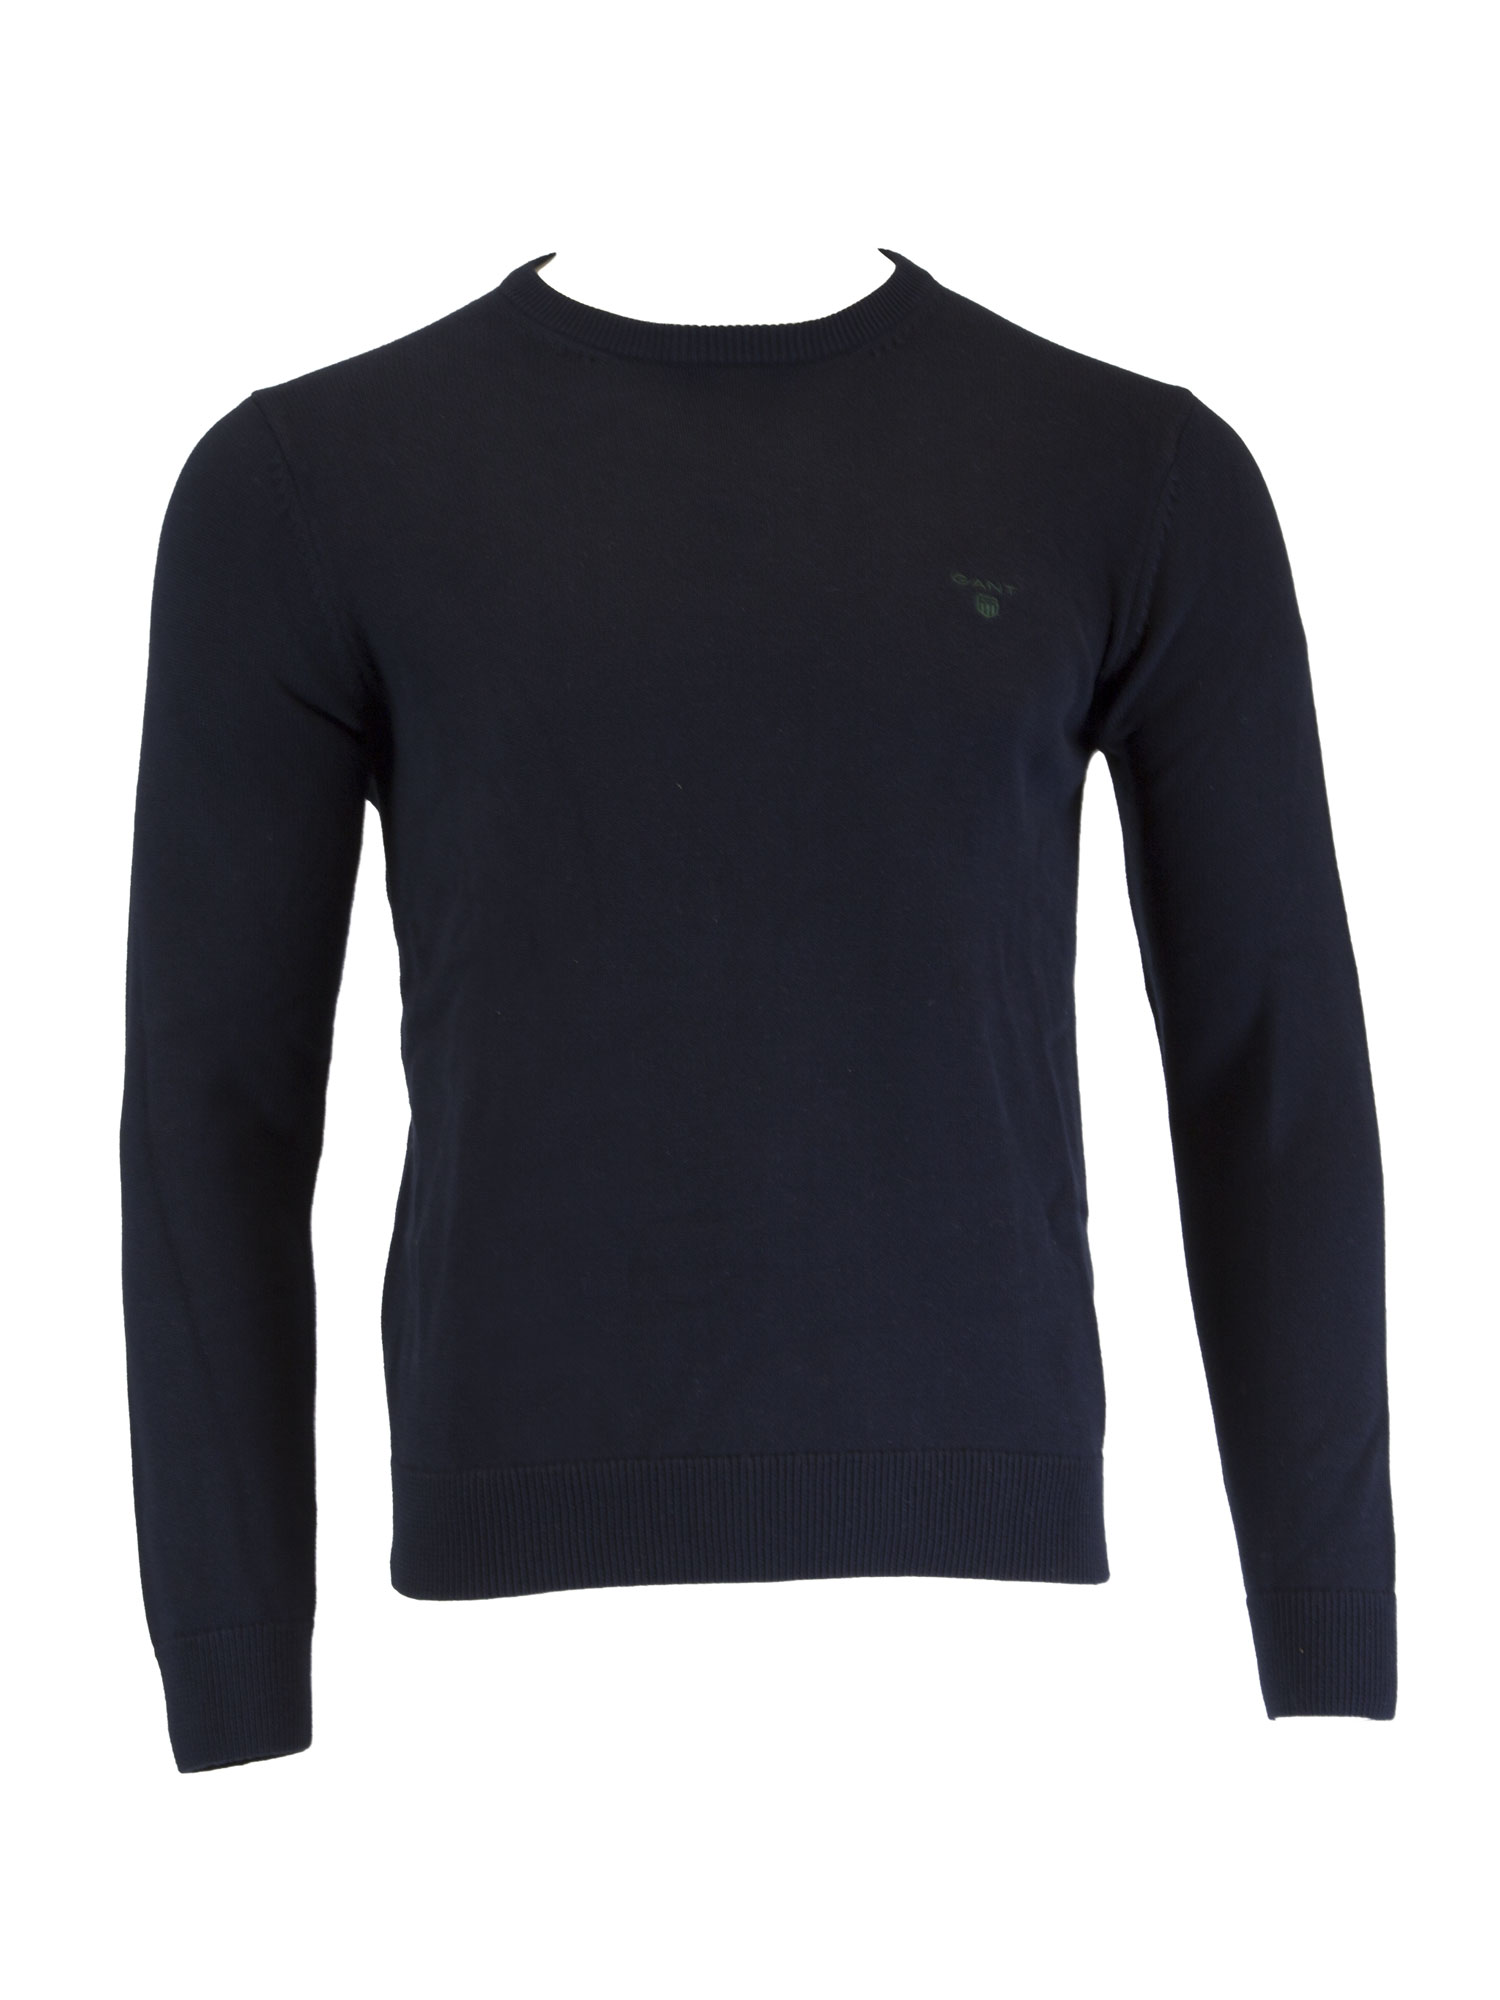 GANT Men's Contrast Cotton Crew Neck Sweater 83081 $125 NWT | eBay